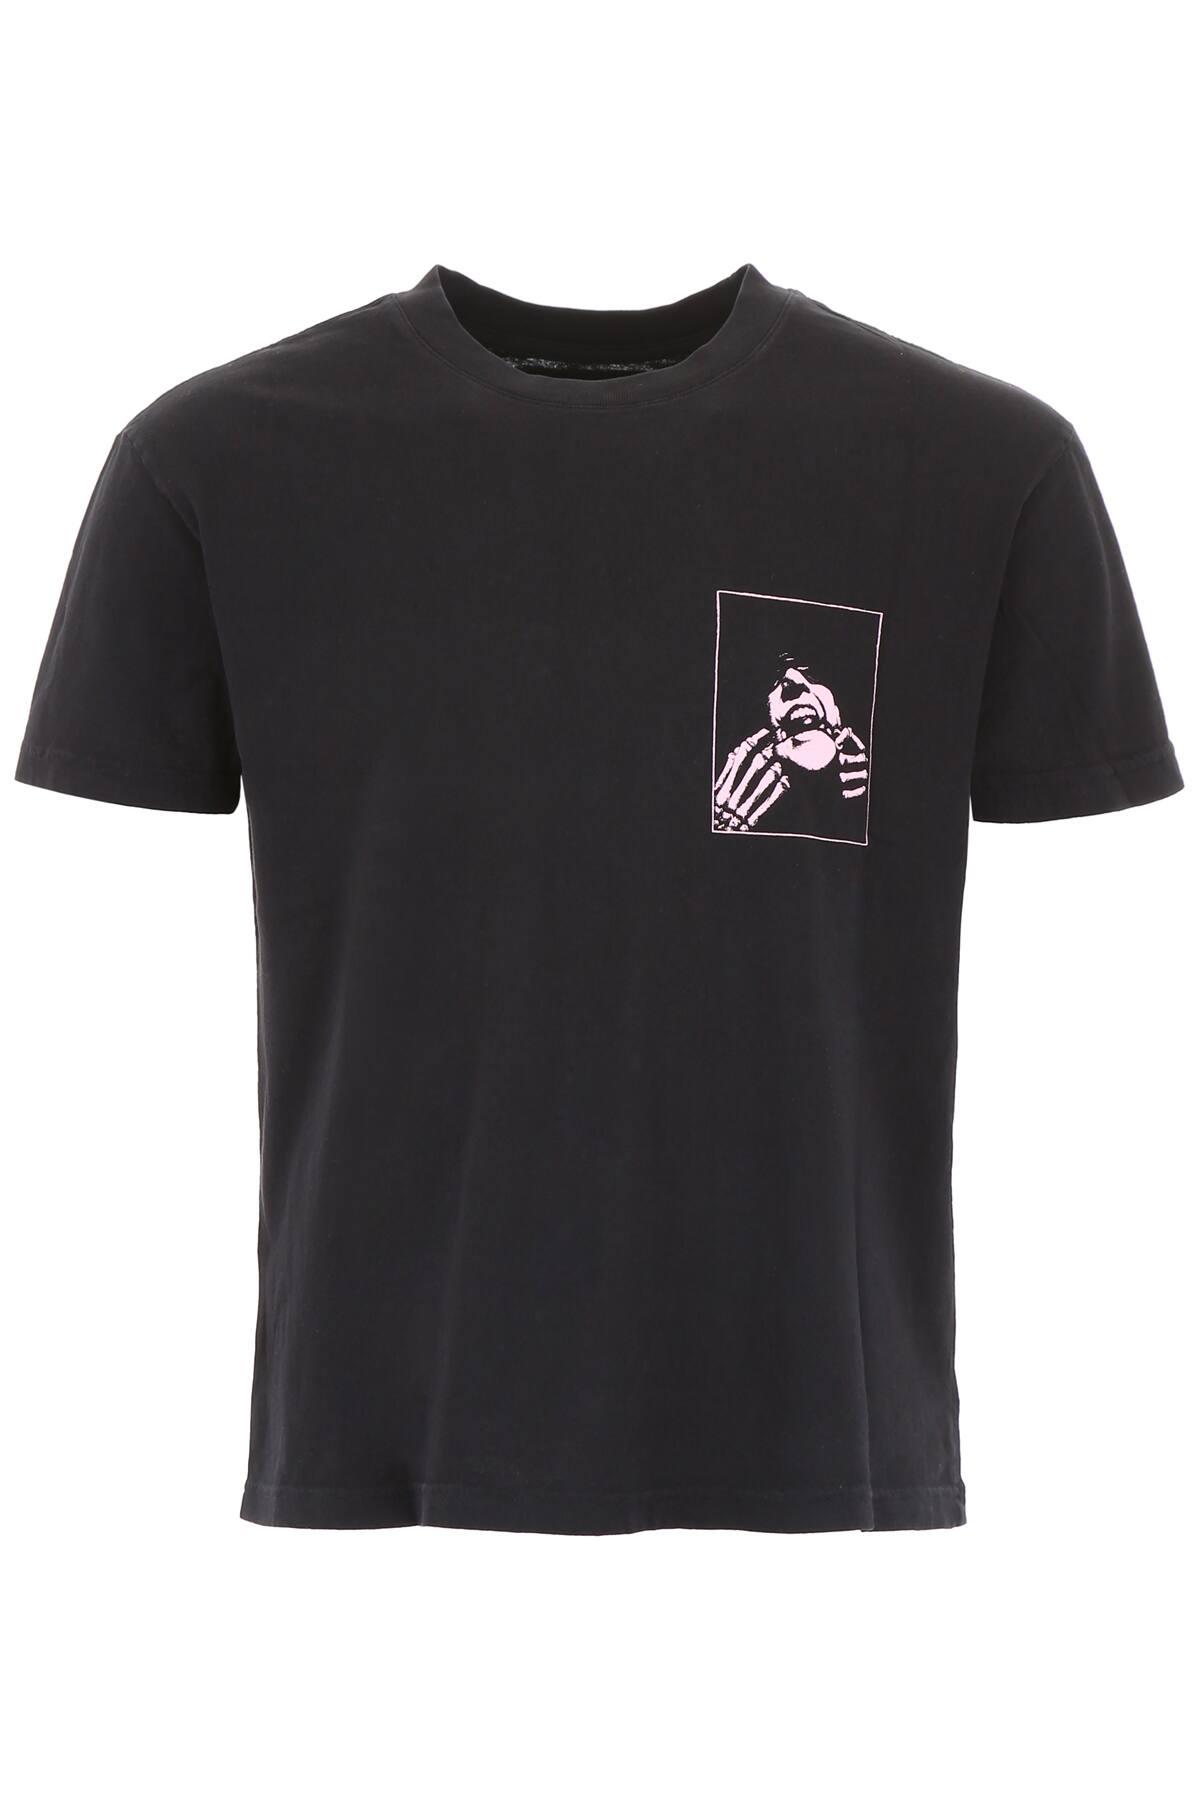 RTA Dark Side T-shirt in Black Pink (Black) for Men - Save 39% - Lyst